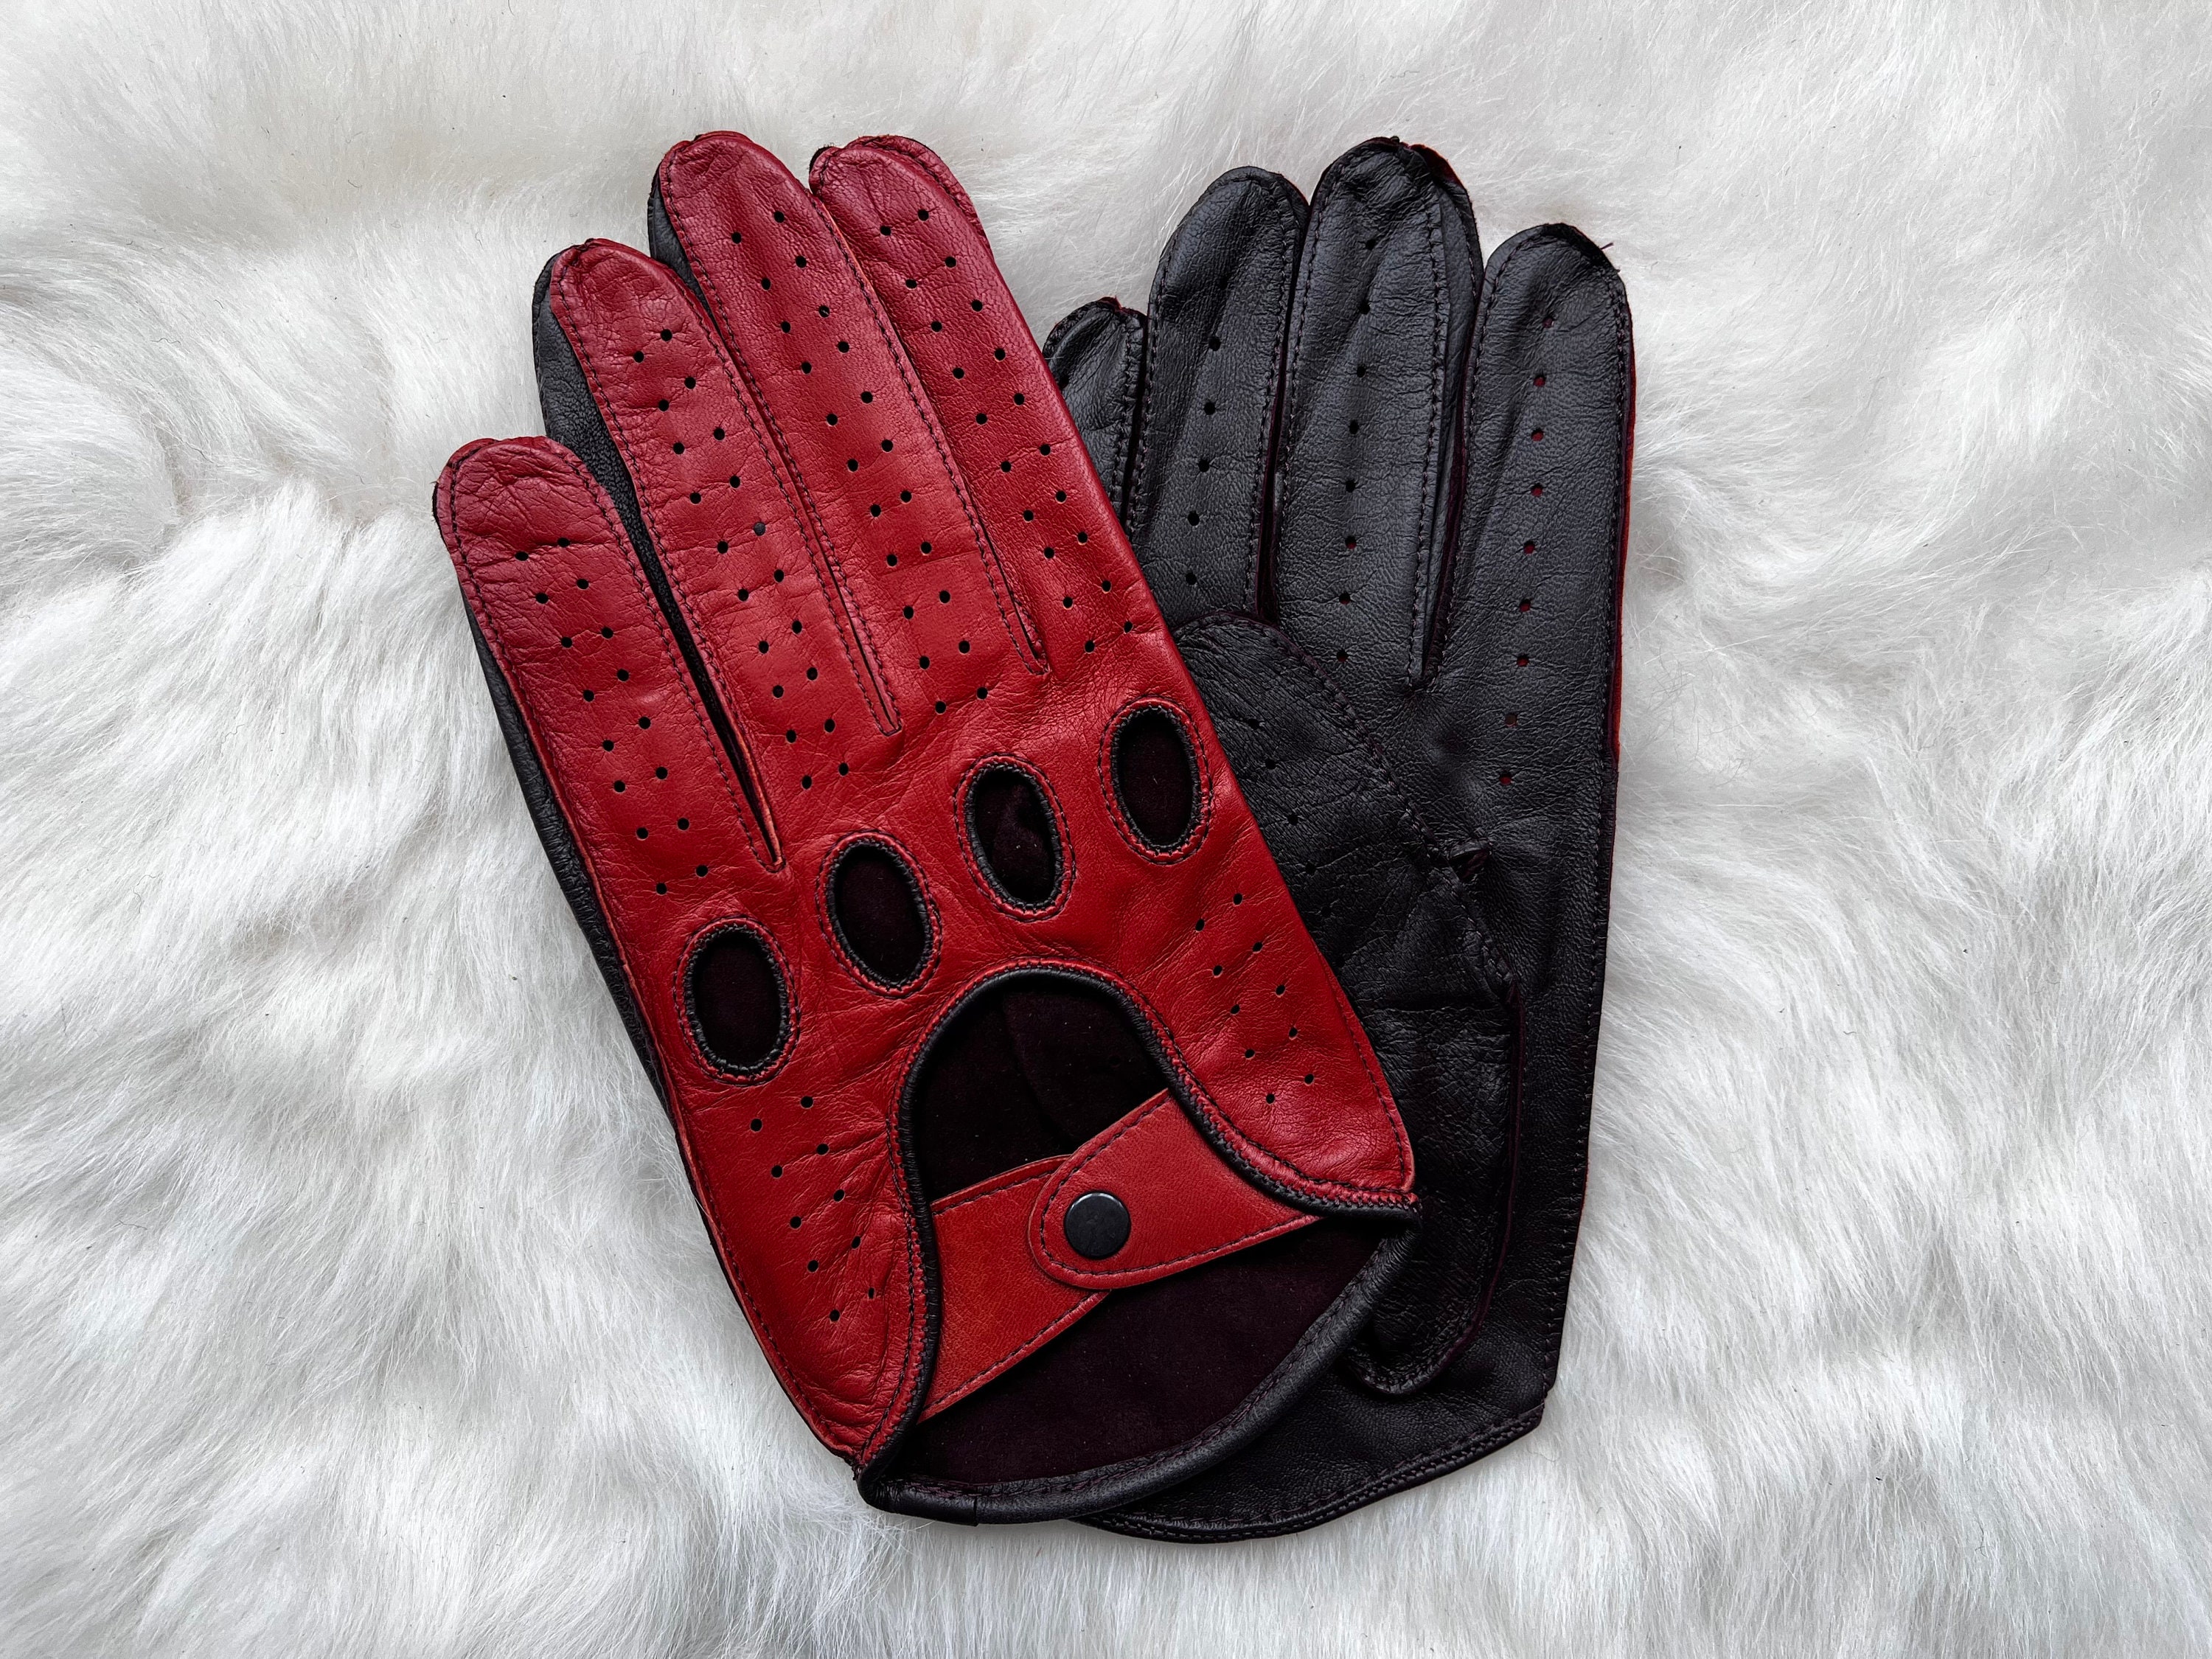 Autofahrer Lederhandschuhe Herren Schwarz mit Rote Nähen Auto Handschuhe